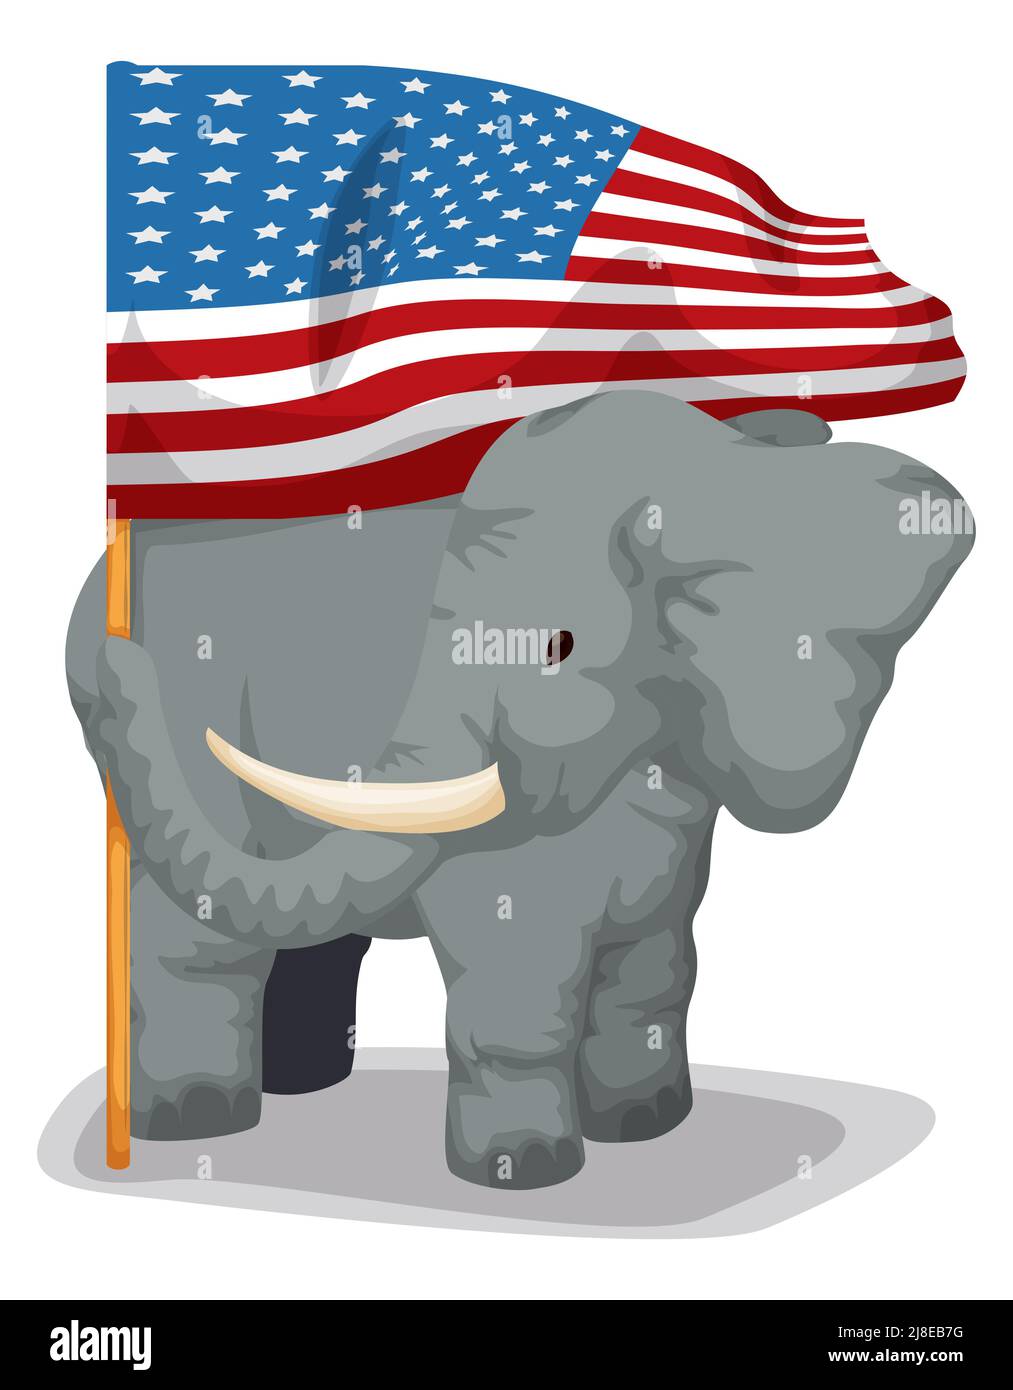 Usa political cartoon elephant hi-res stock photography and images - Alamy